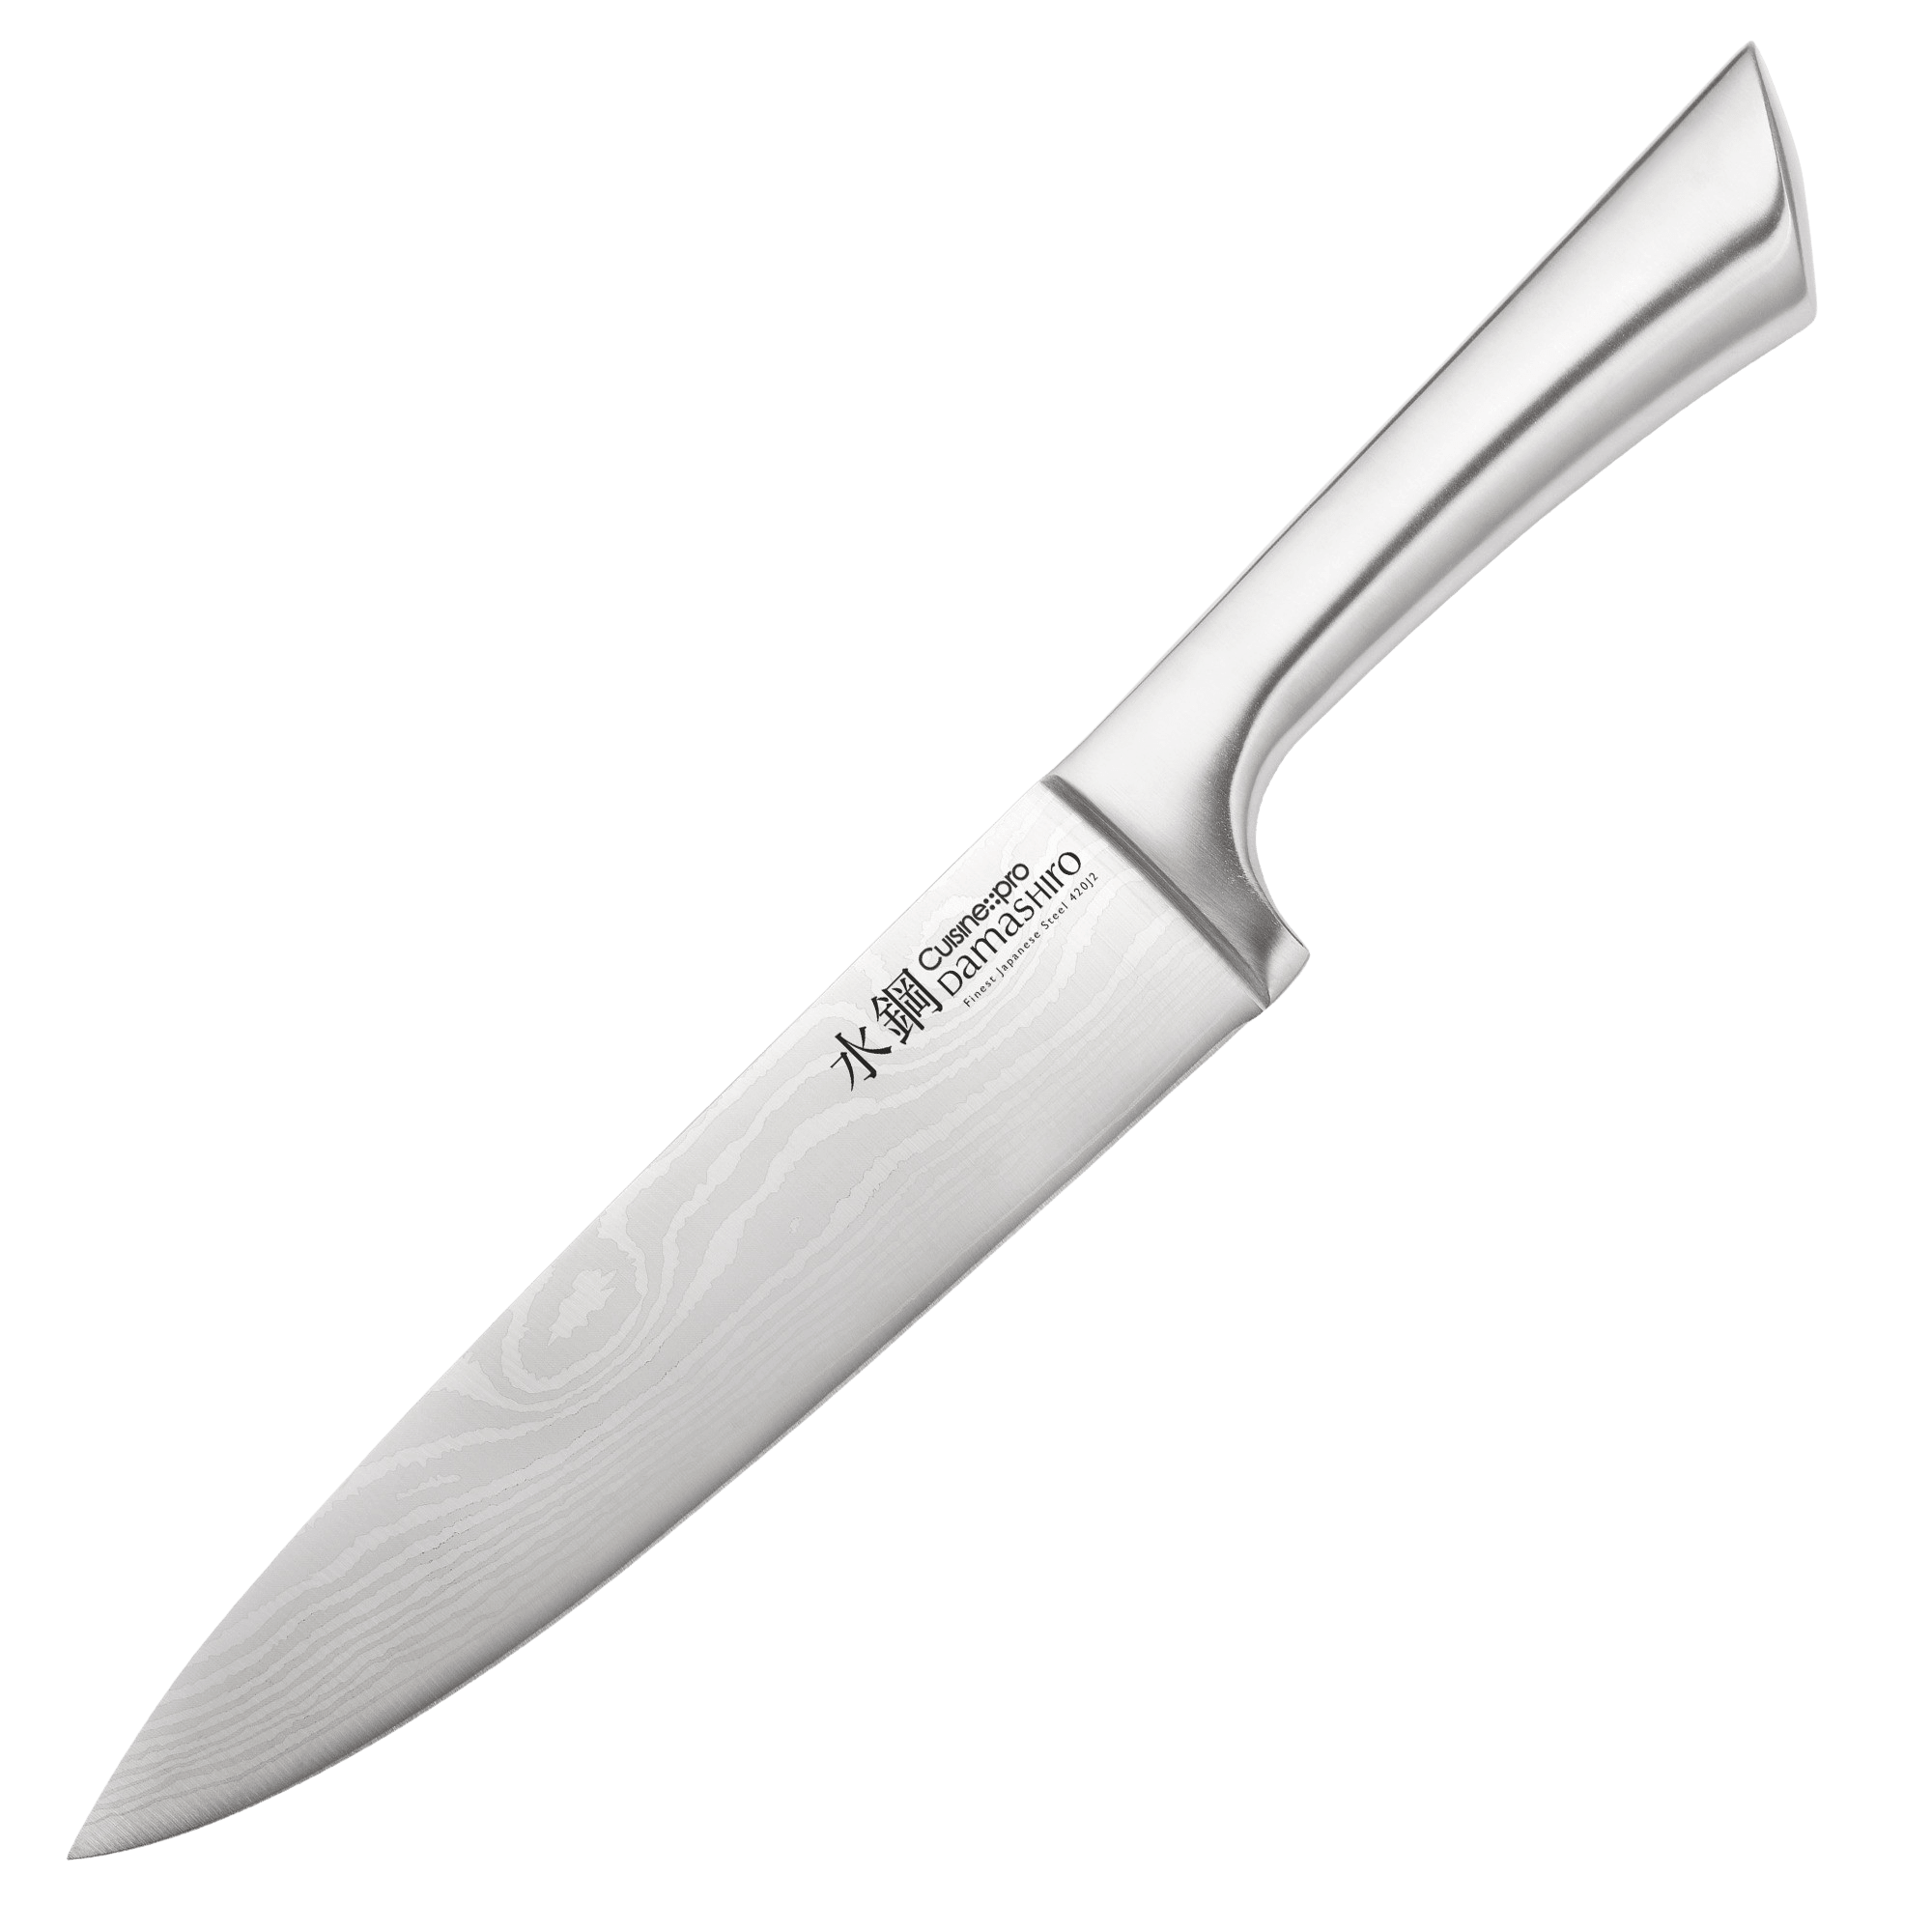 Cuisine::pro® iD3® Black Samurai™ Chefs Knife 20cm/8